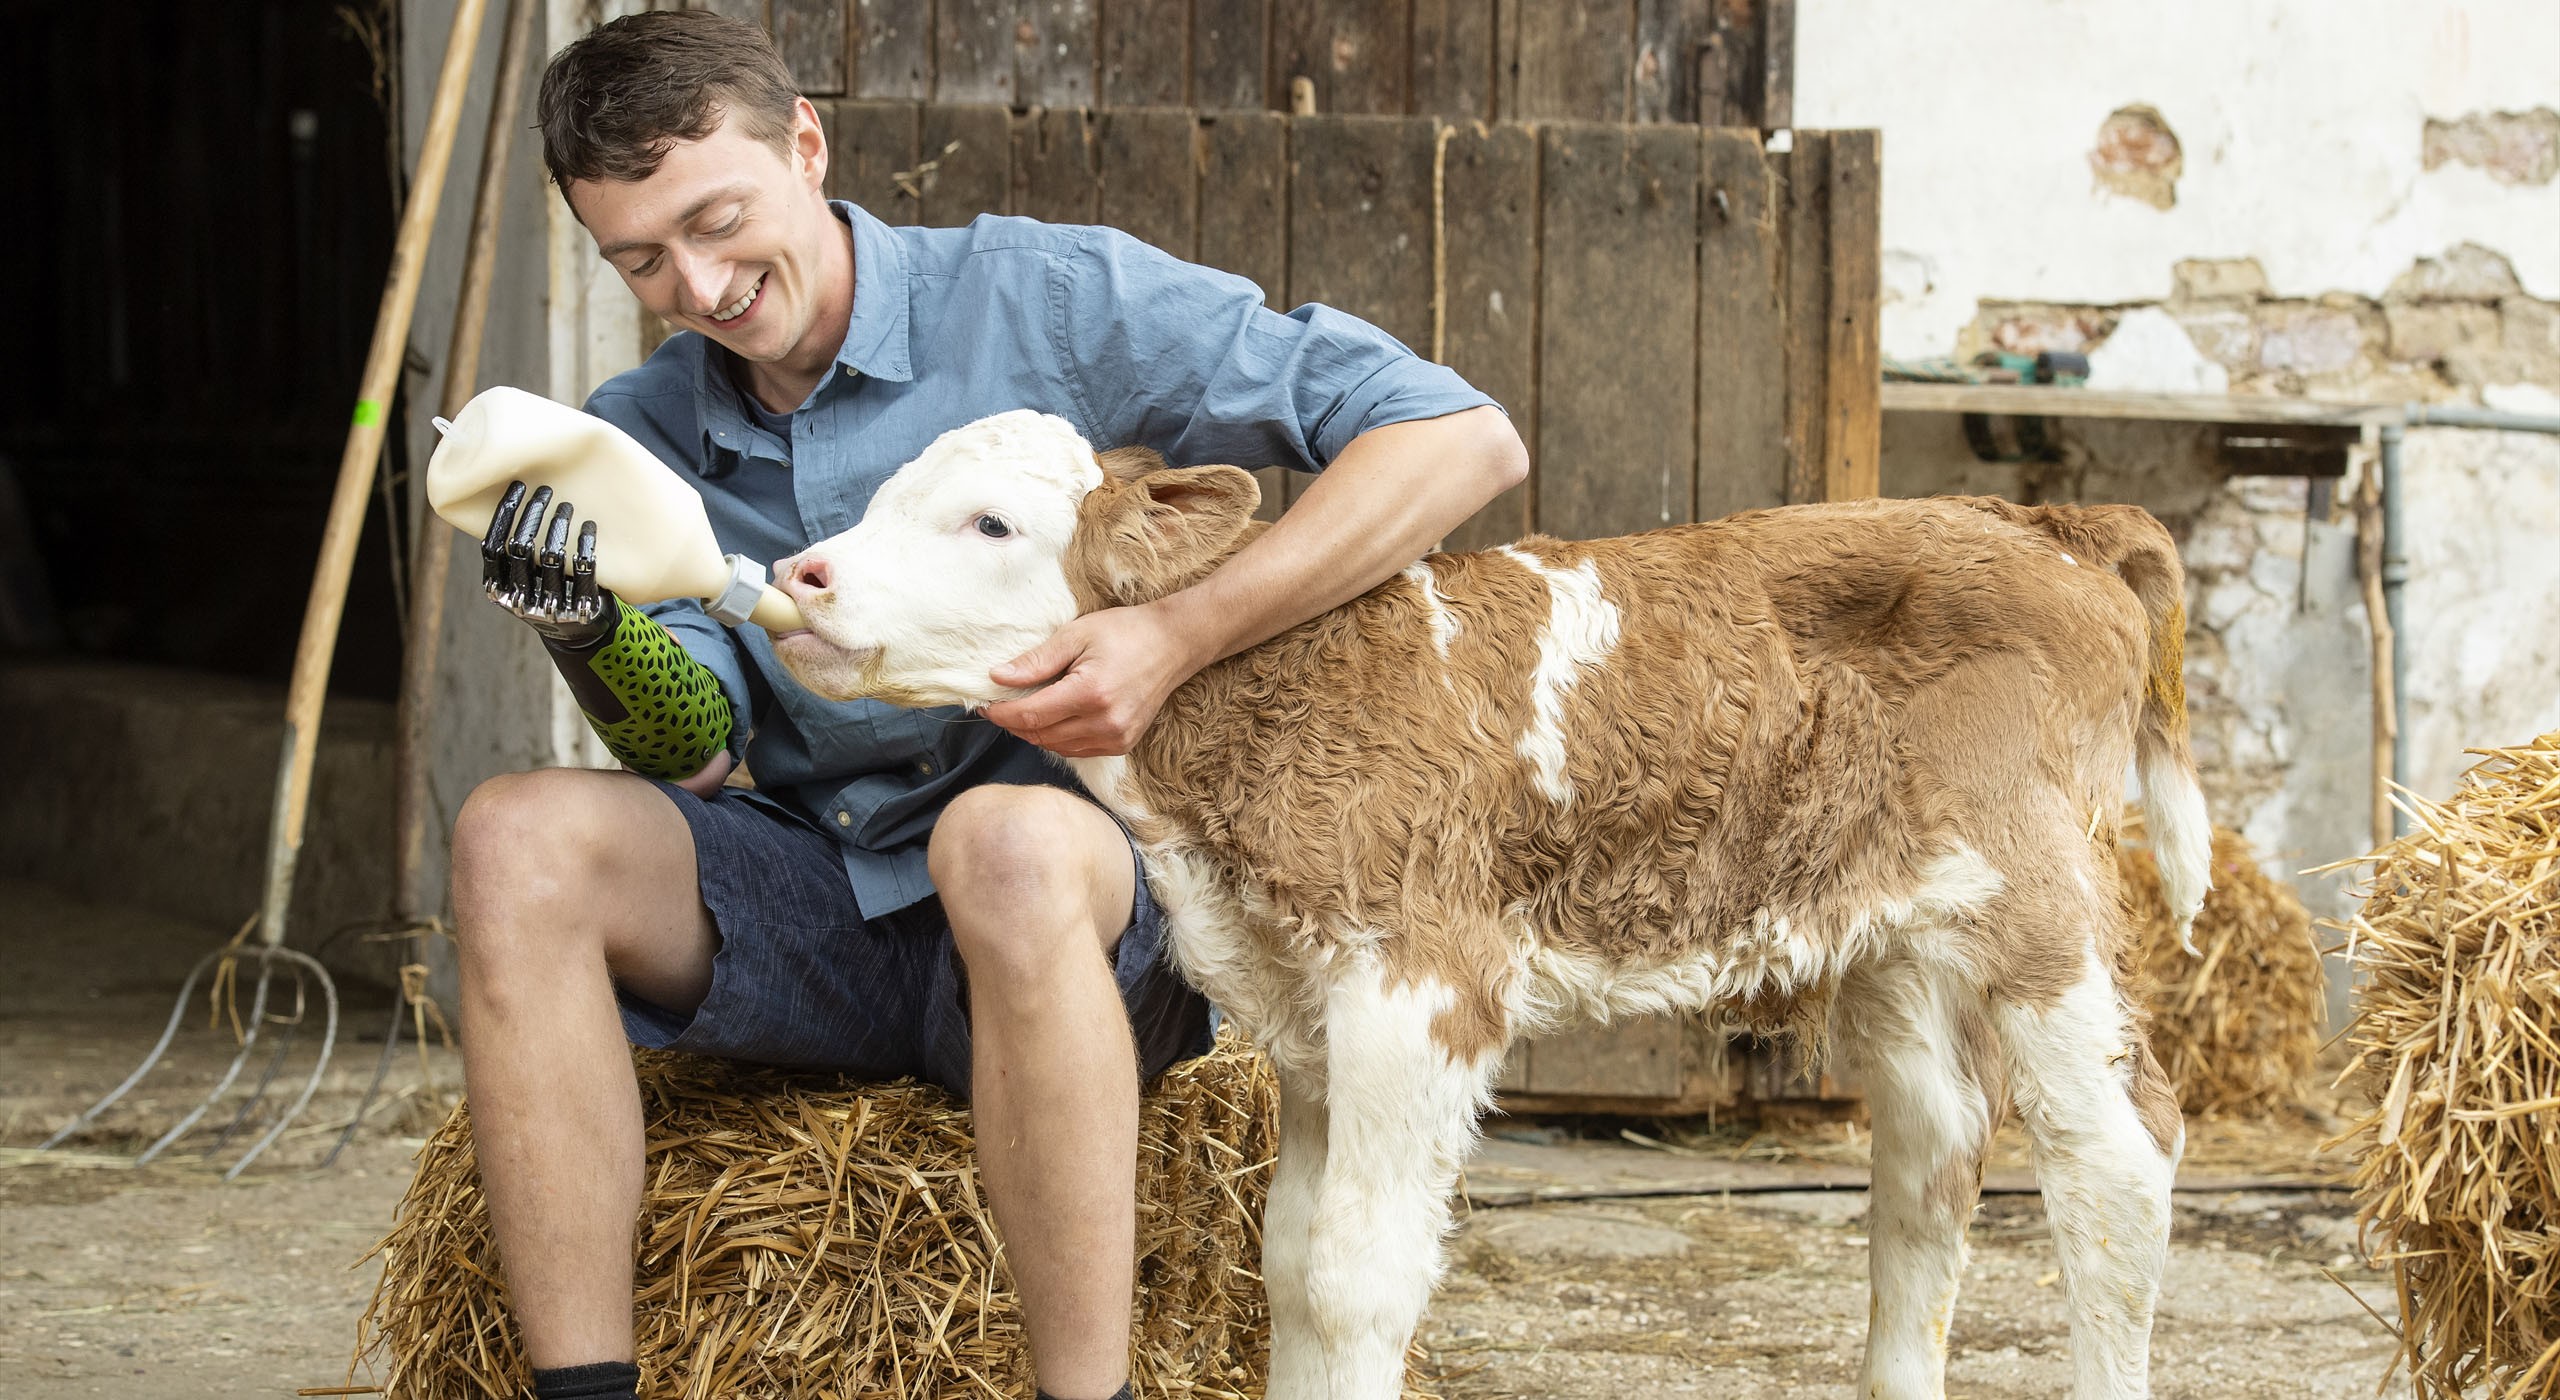 Junger Mann mit Armprothese füttert Schaf